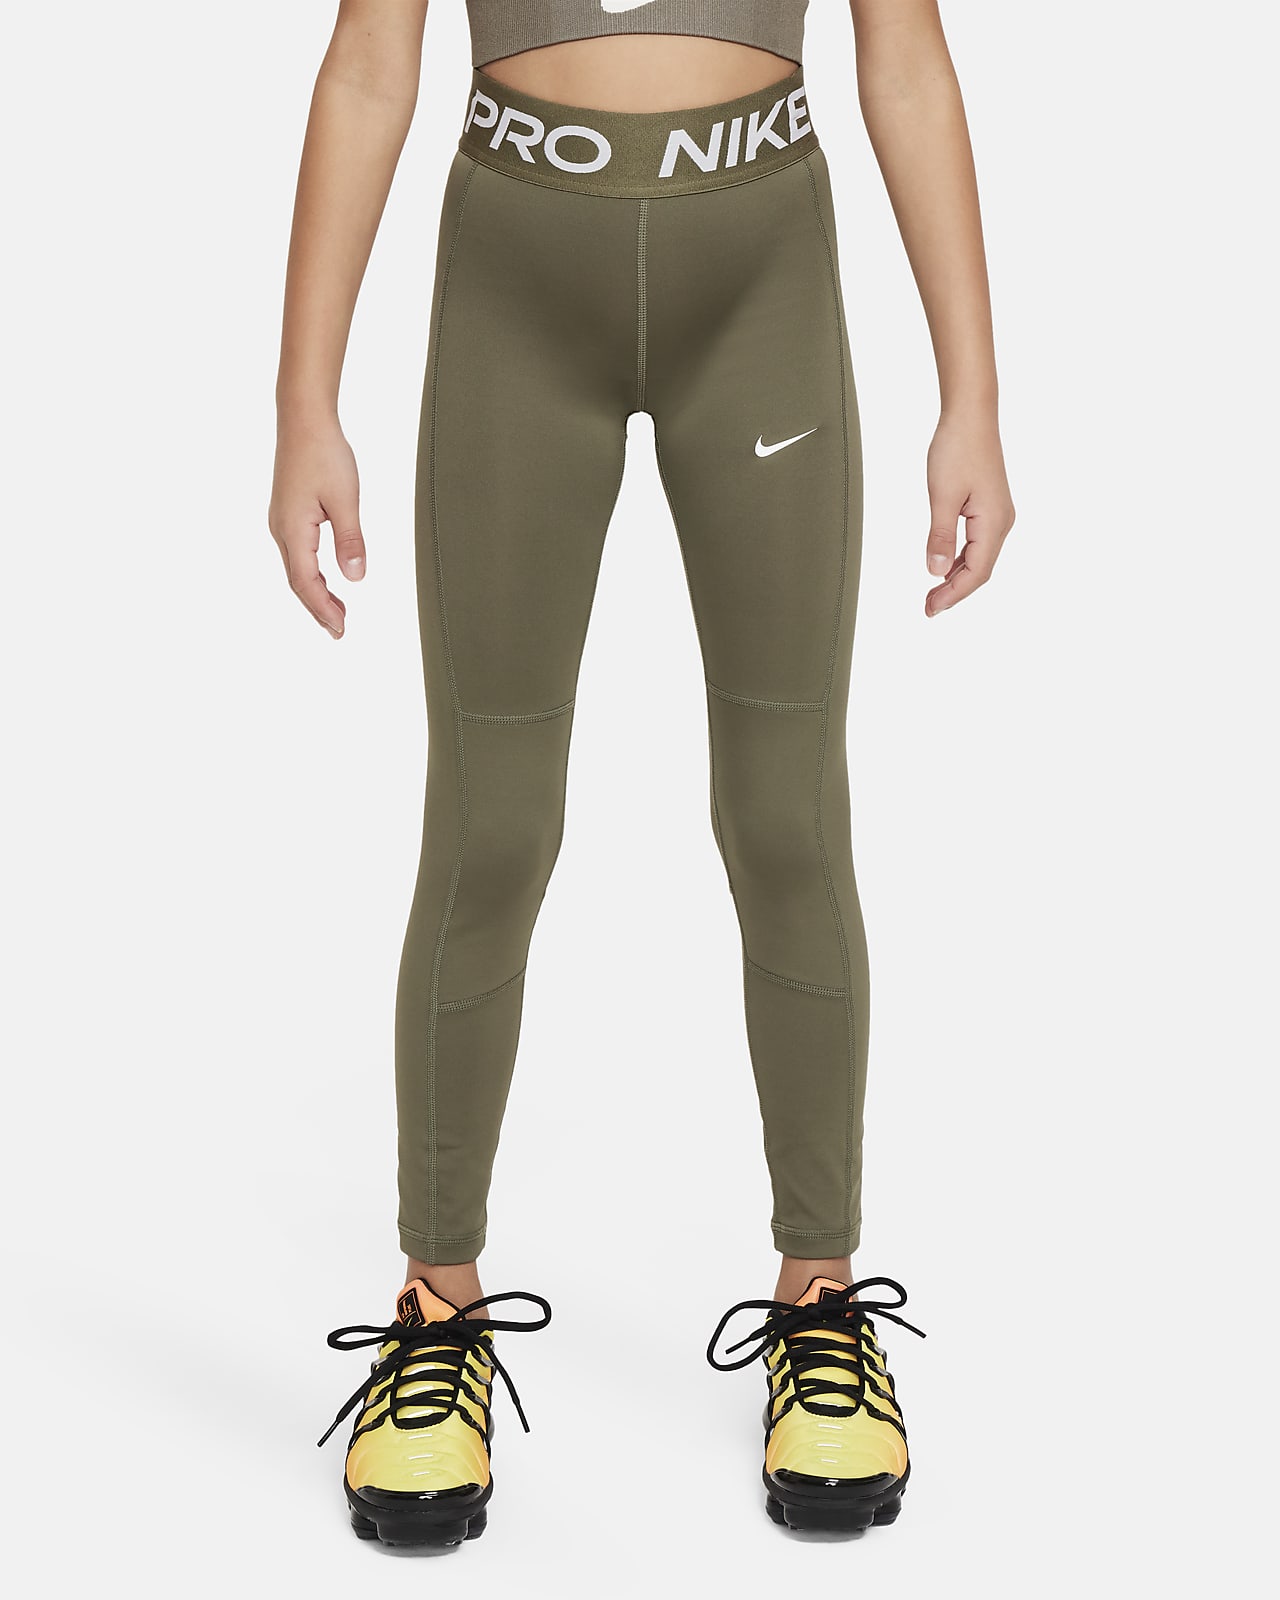 Nike Pro Warm Dri-fit Leggings  Leggings are not pants, Outfits